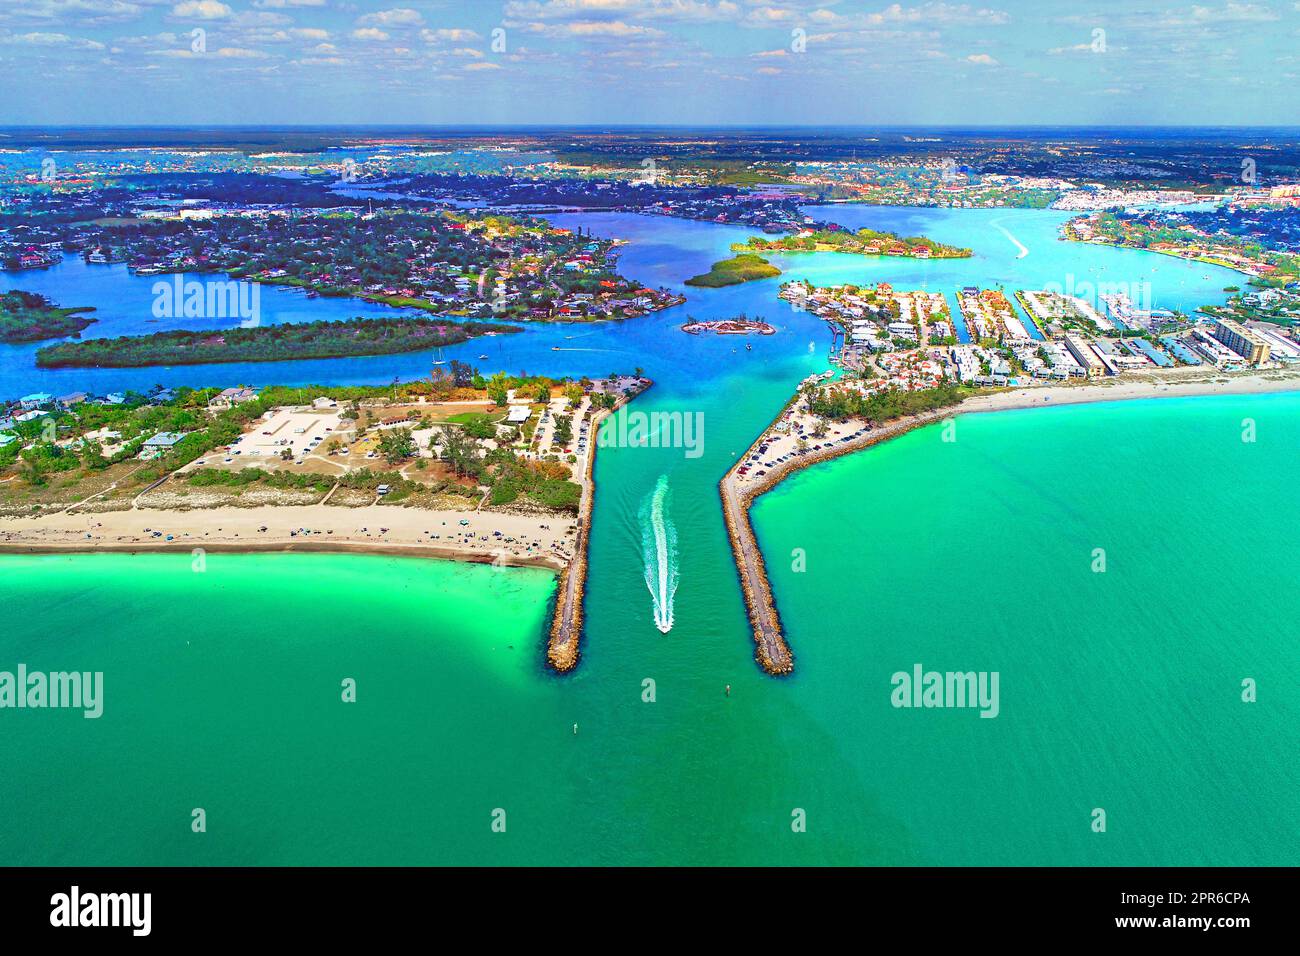 The Jetty at Venice Florida along Florida Gulf Coast a famouss tuorist destination Stock Photo